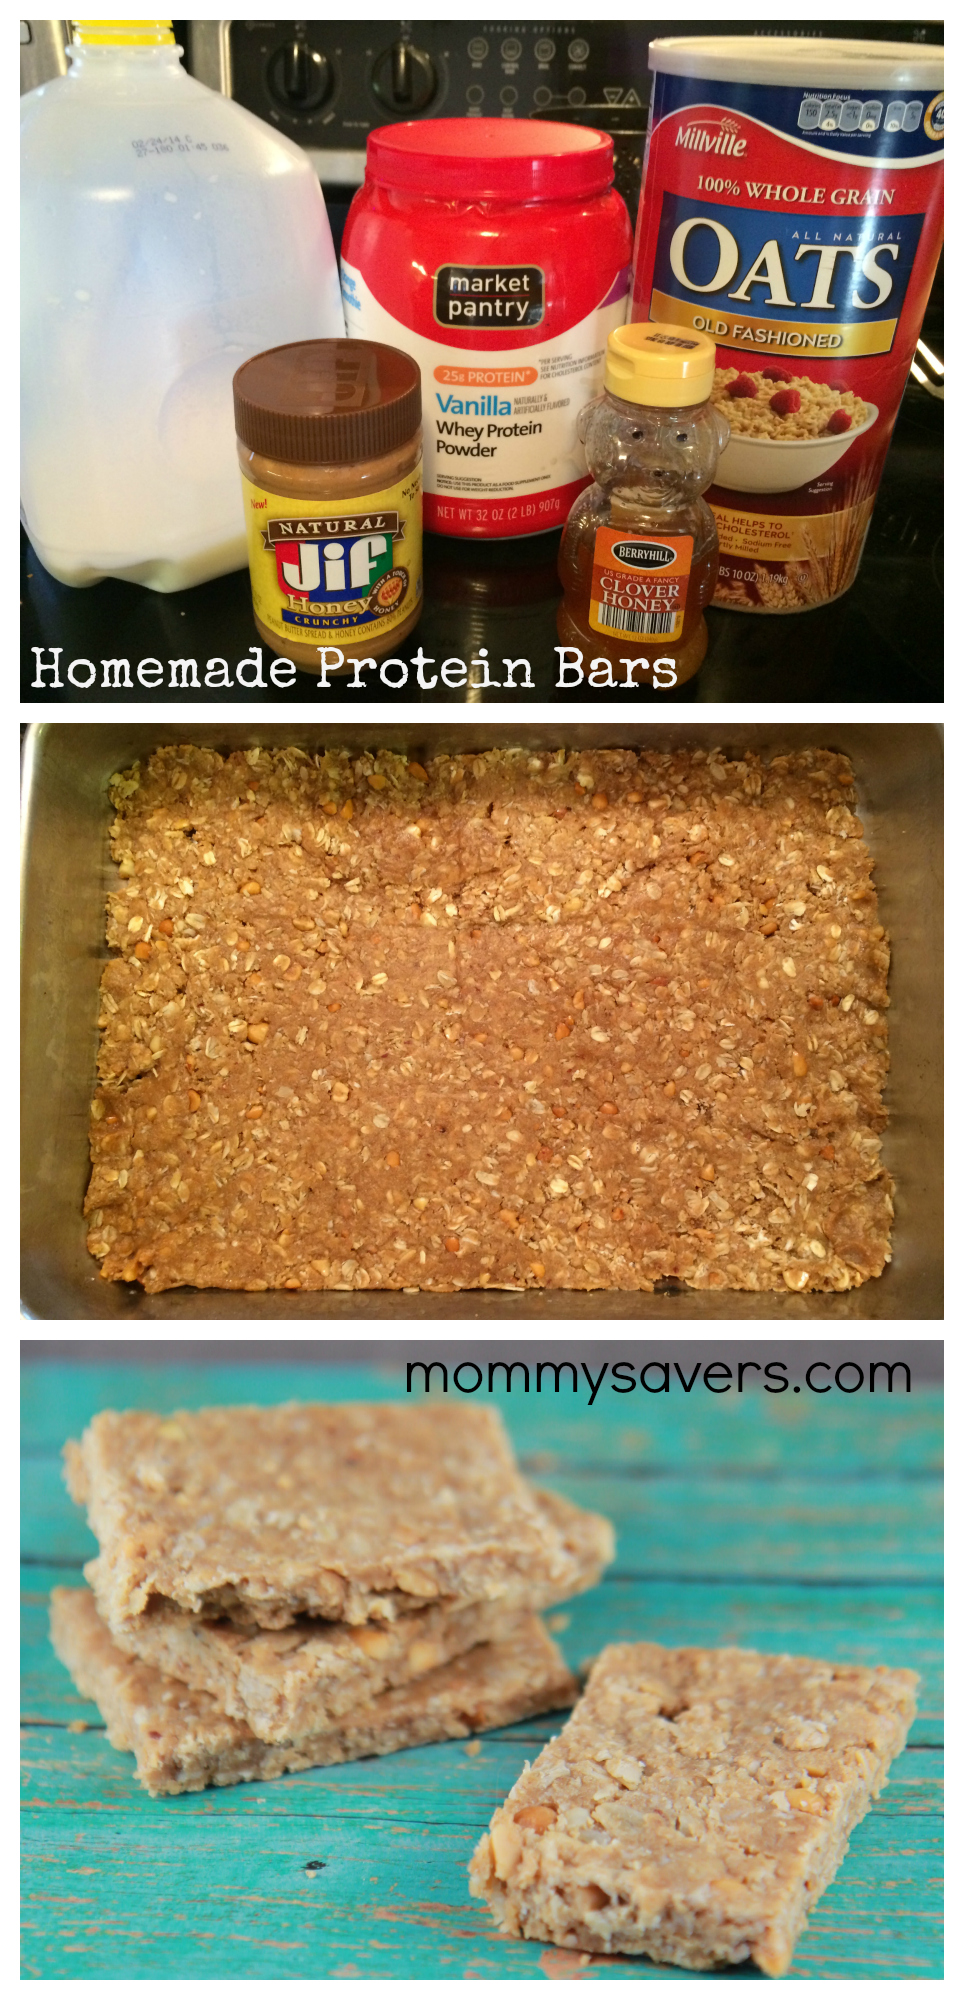 Homemade Protein Bars - Mommysavers